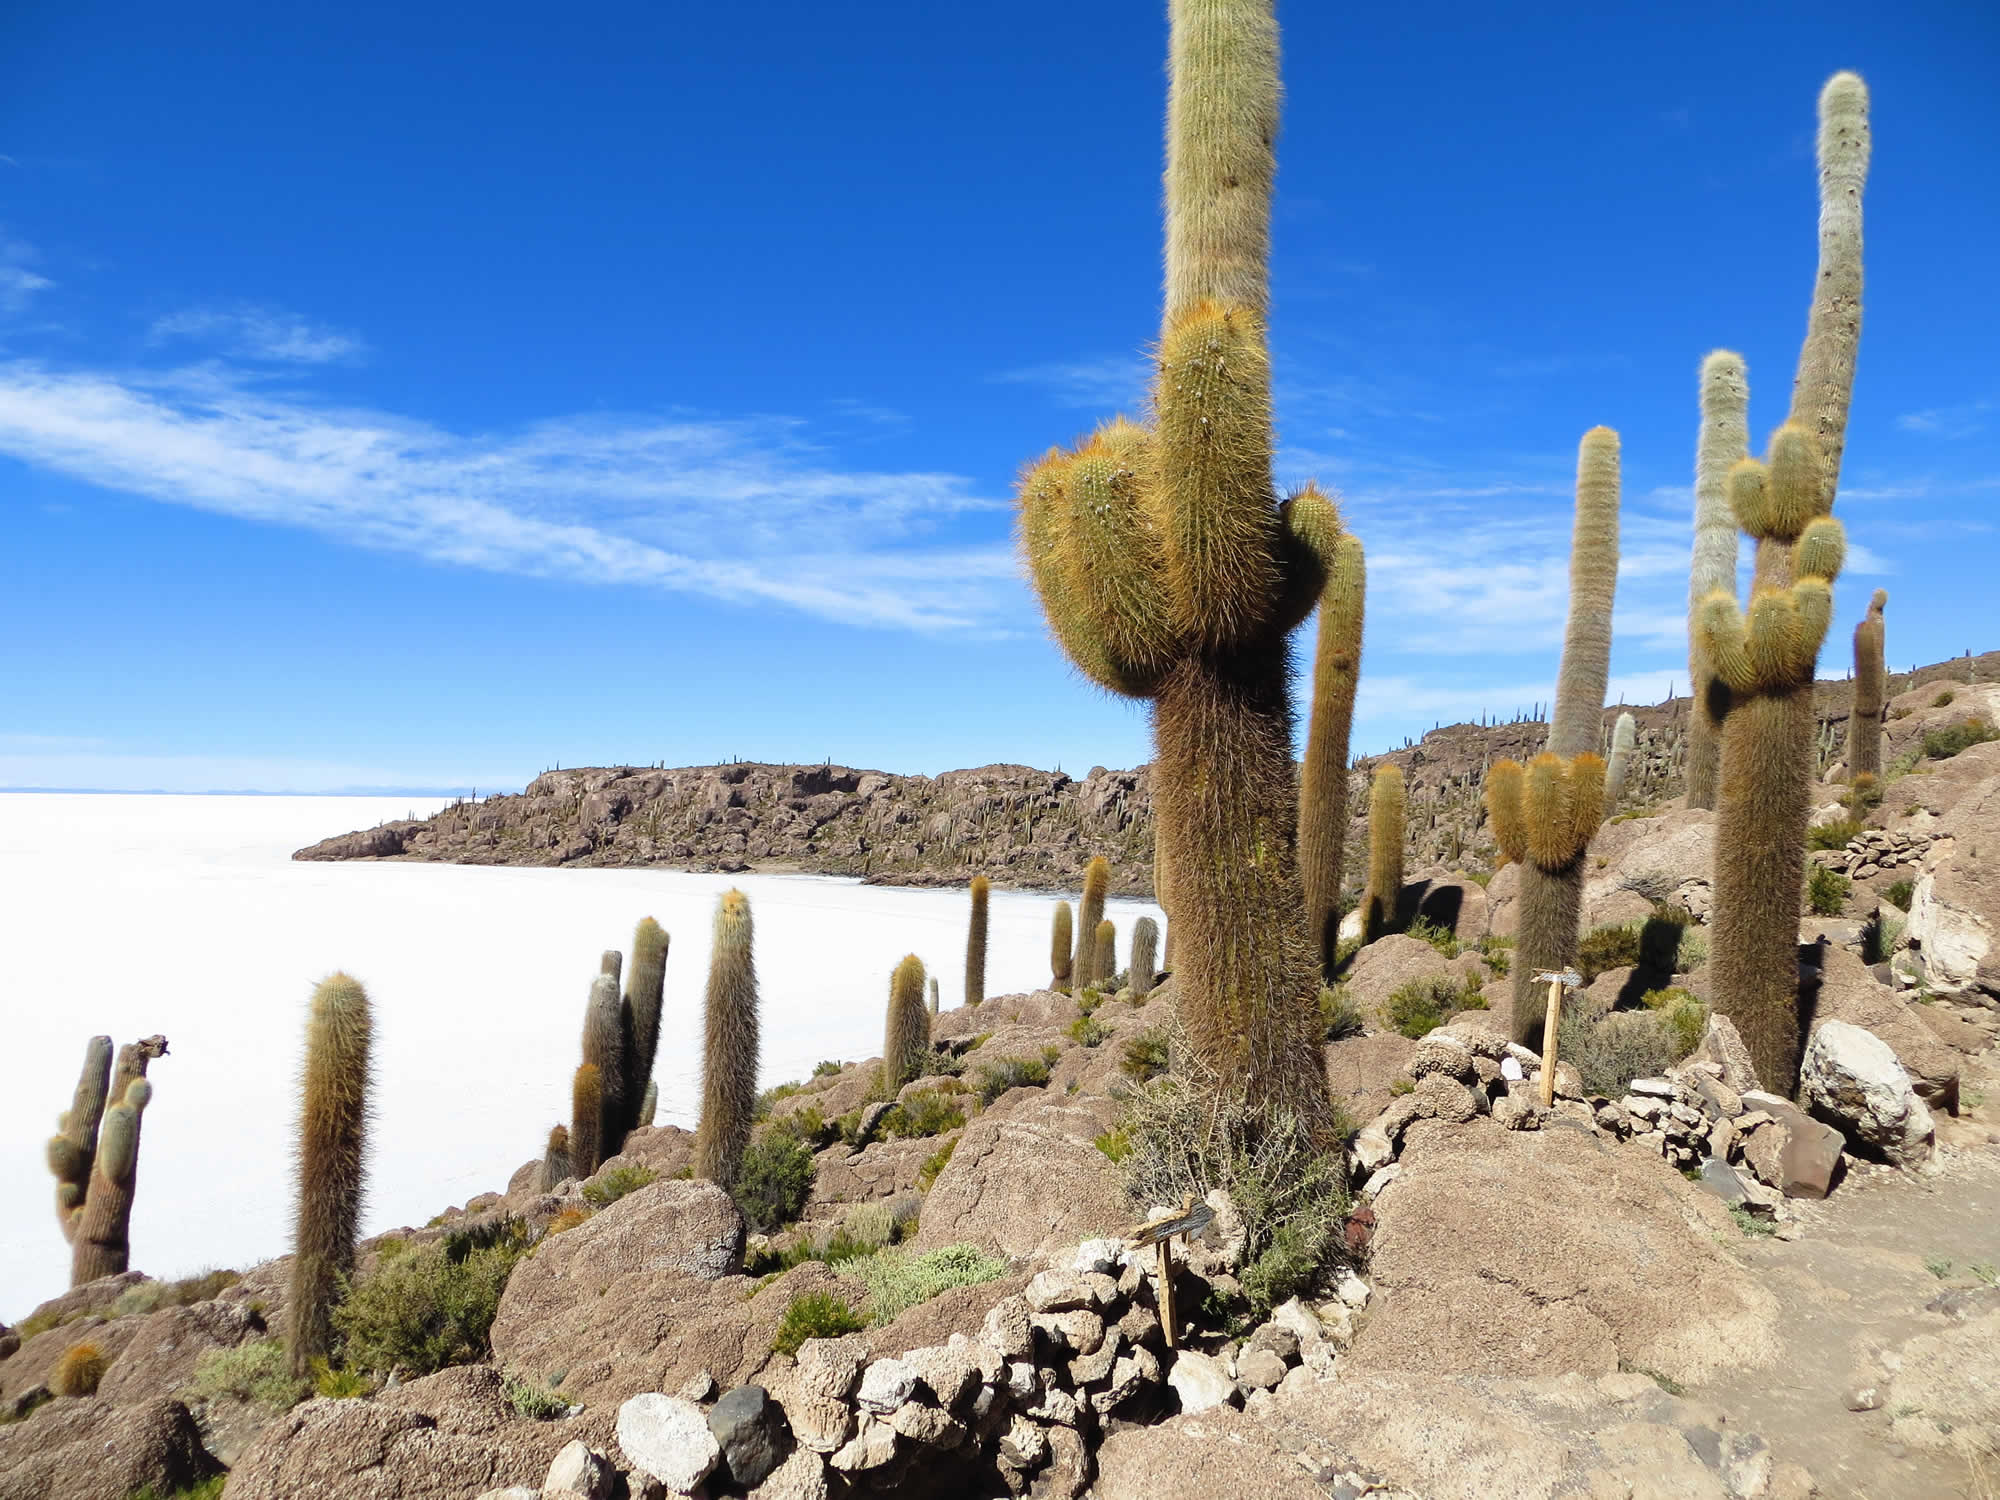 Giant cactus on Isla Incahuasi